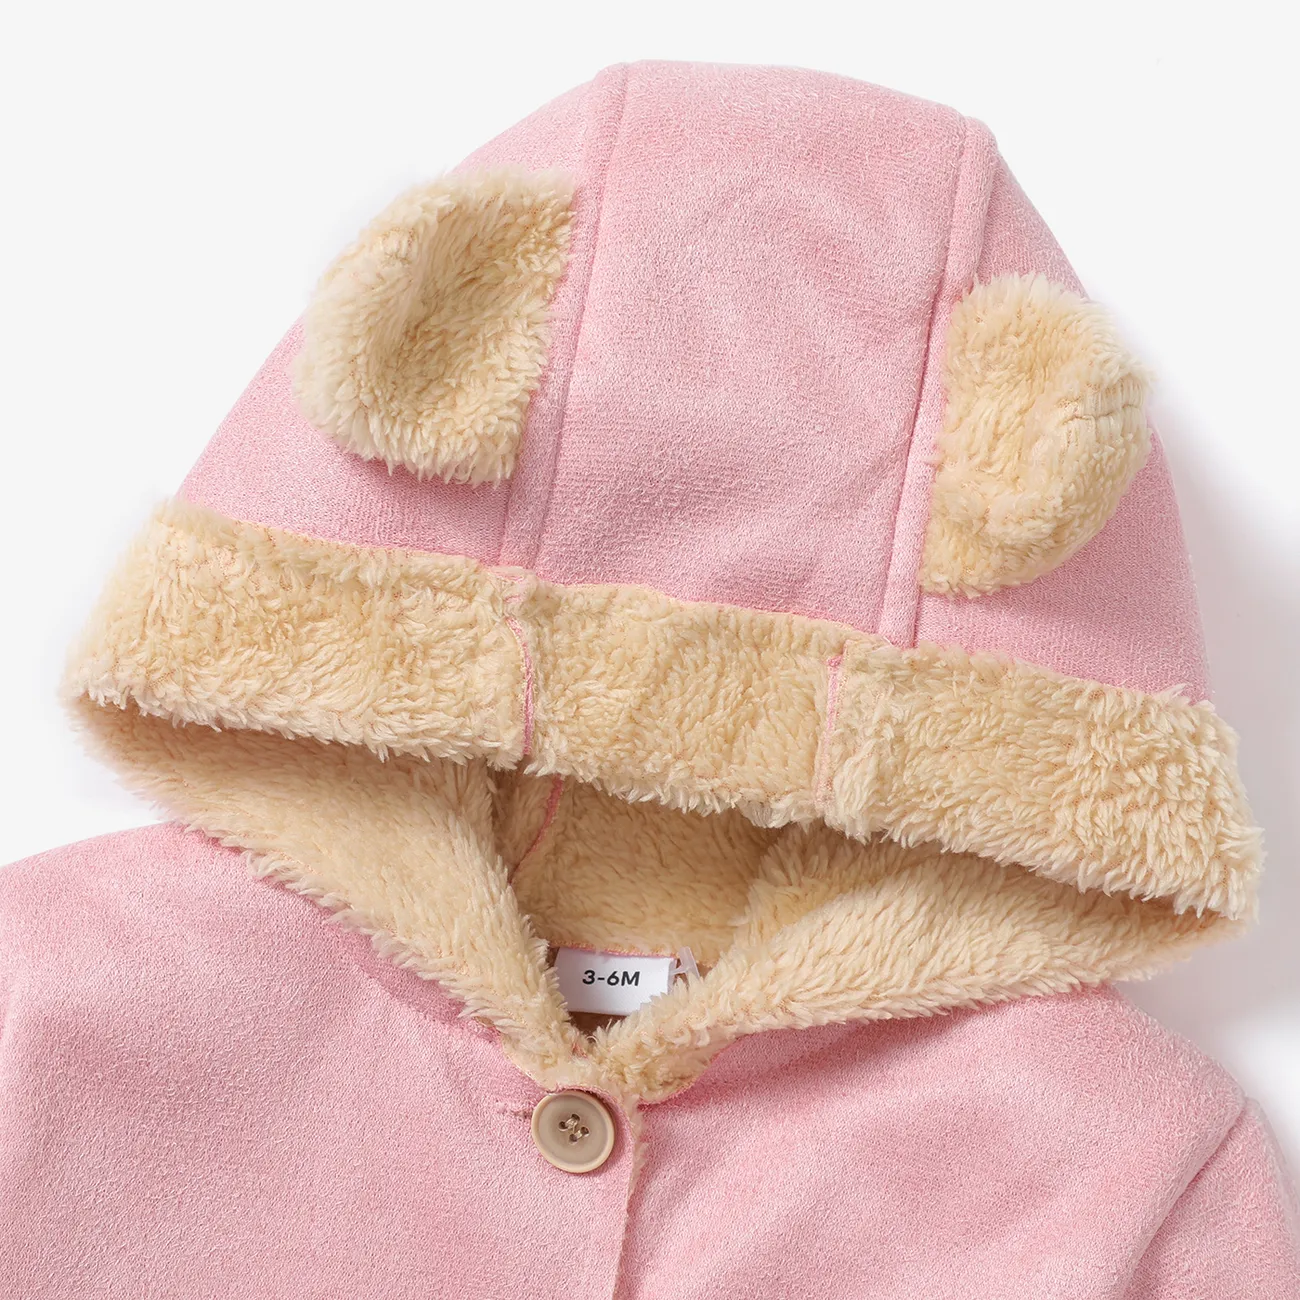 3D Ear Solid Suede and Fleece Long-sleeve Baby Hooded Coat Jacket Pink big image 1